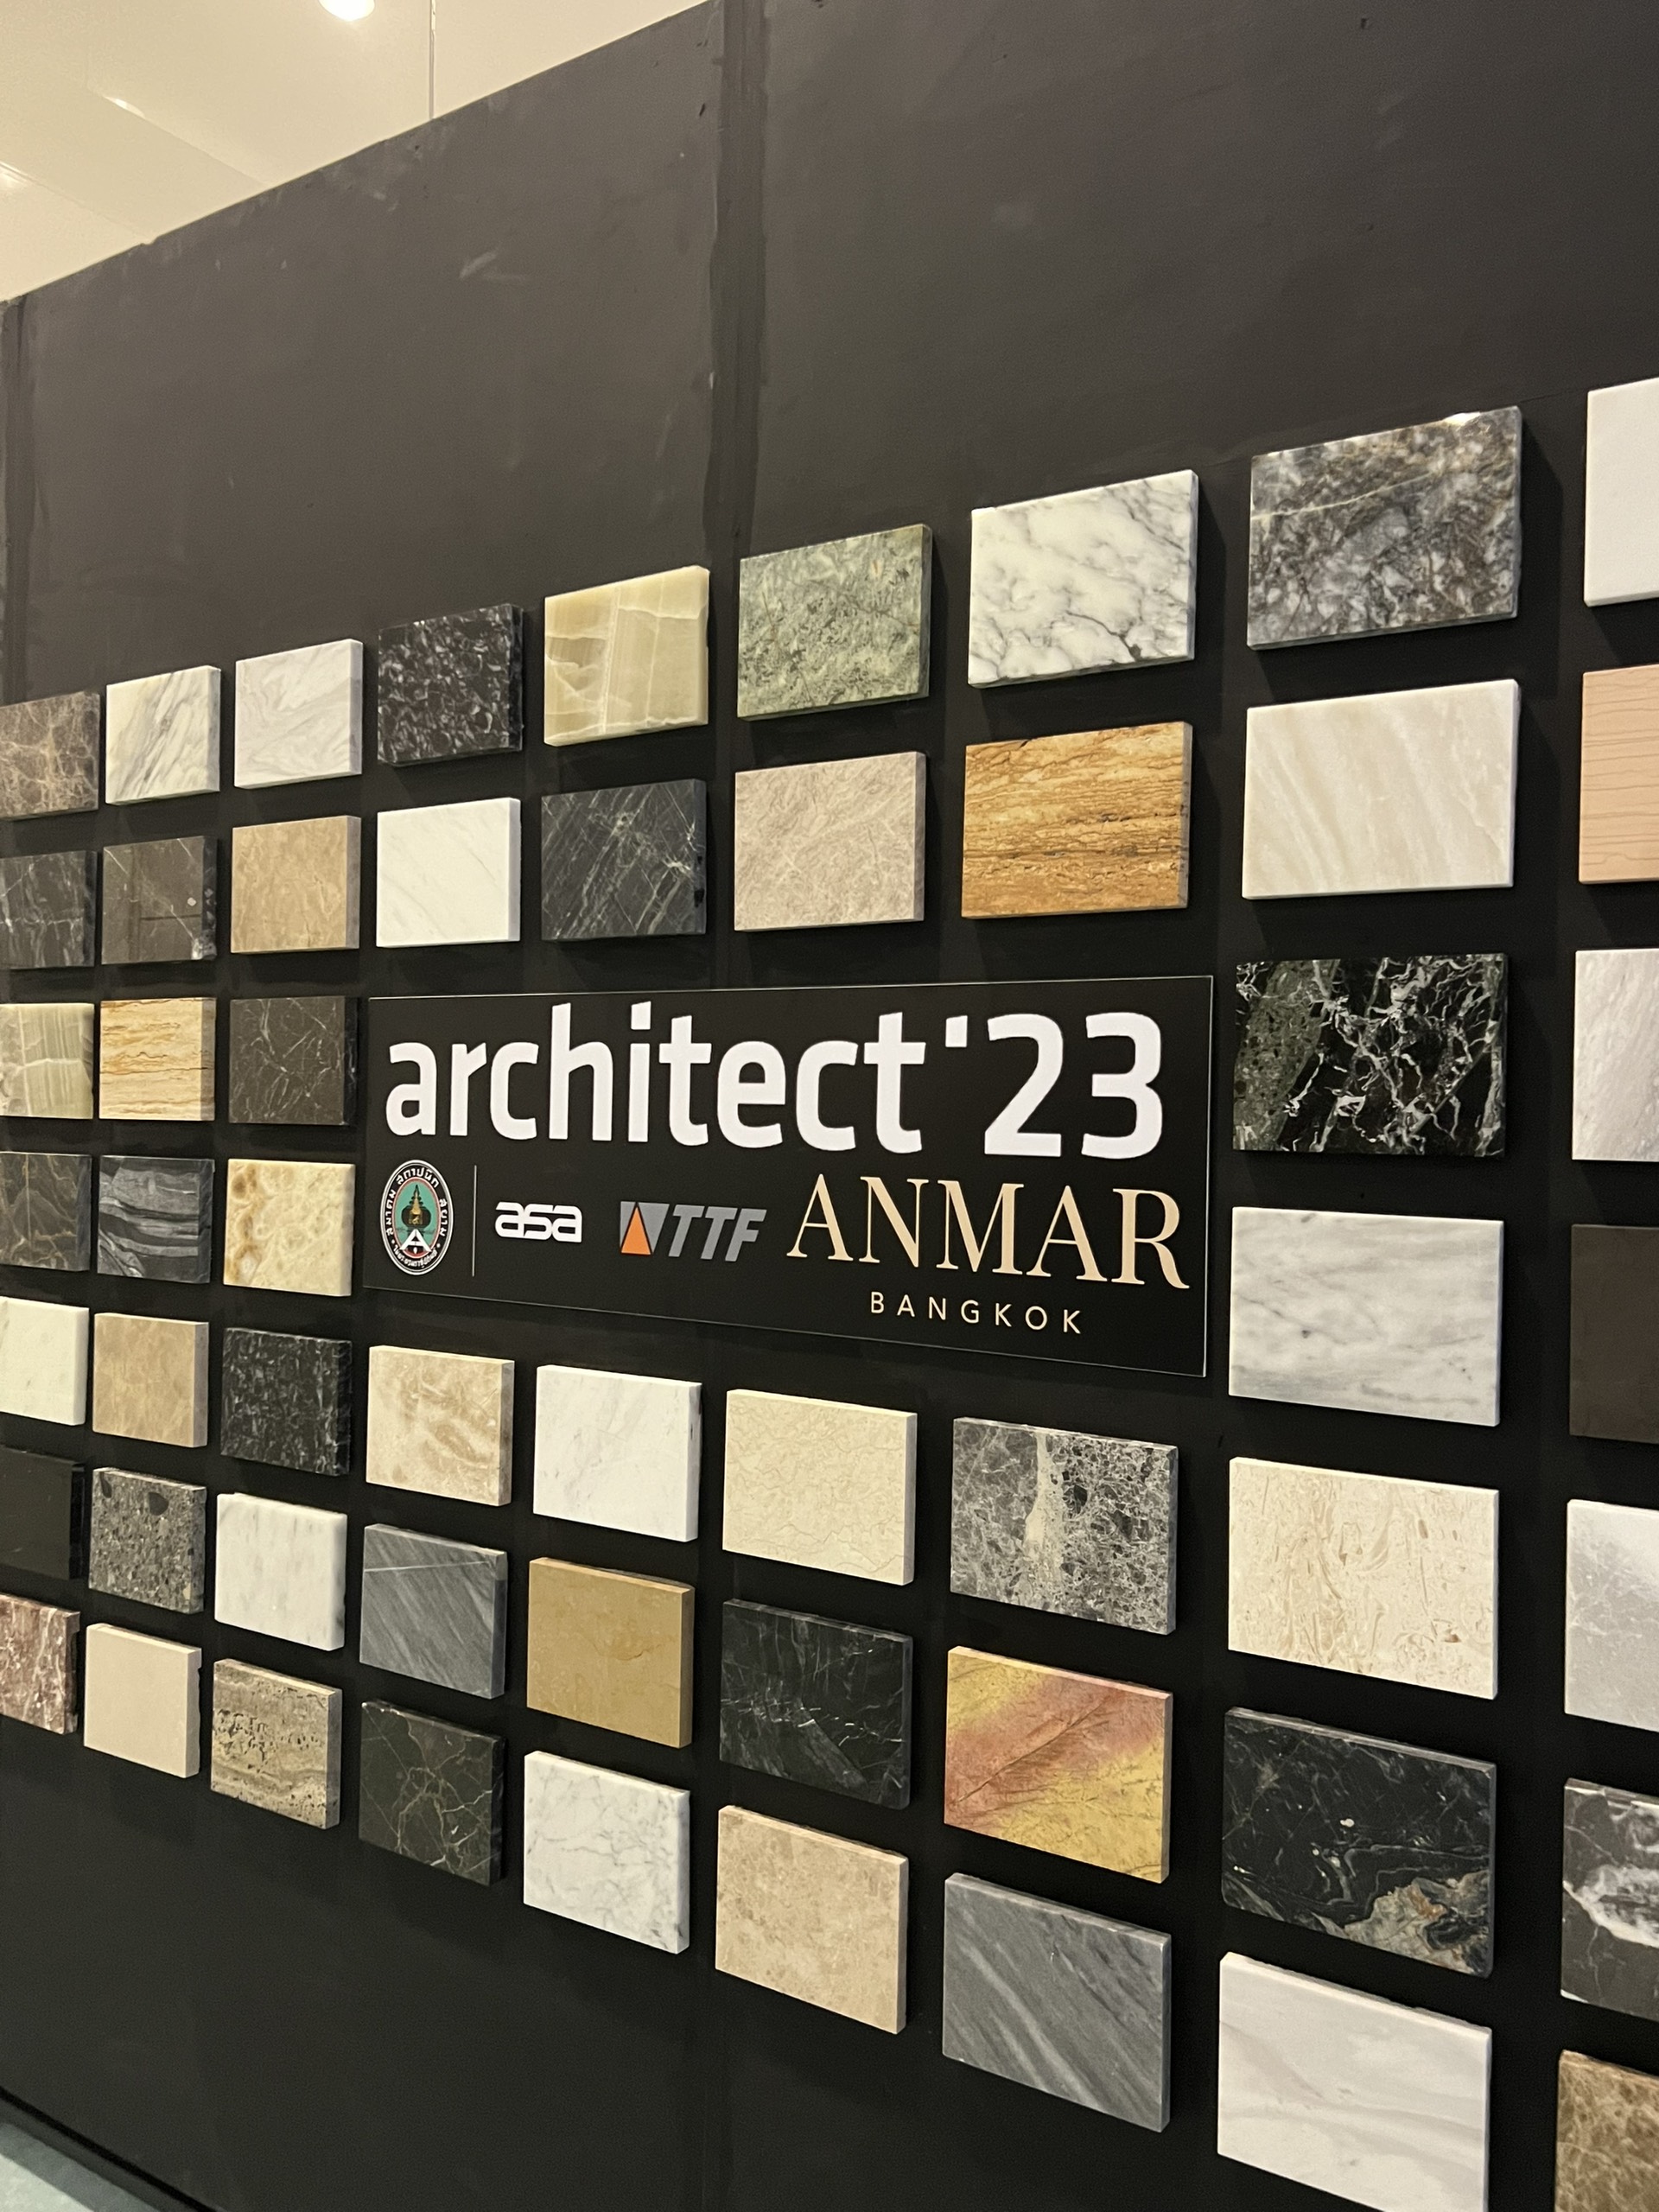 Architect 23 Exhibition